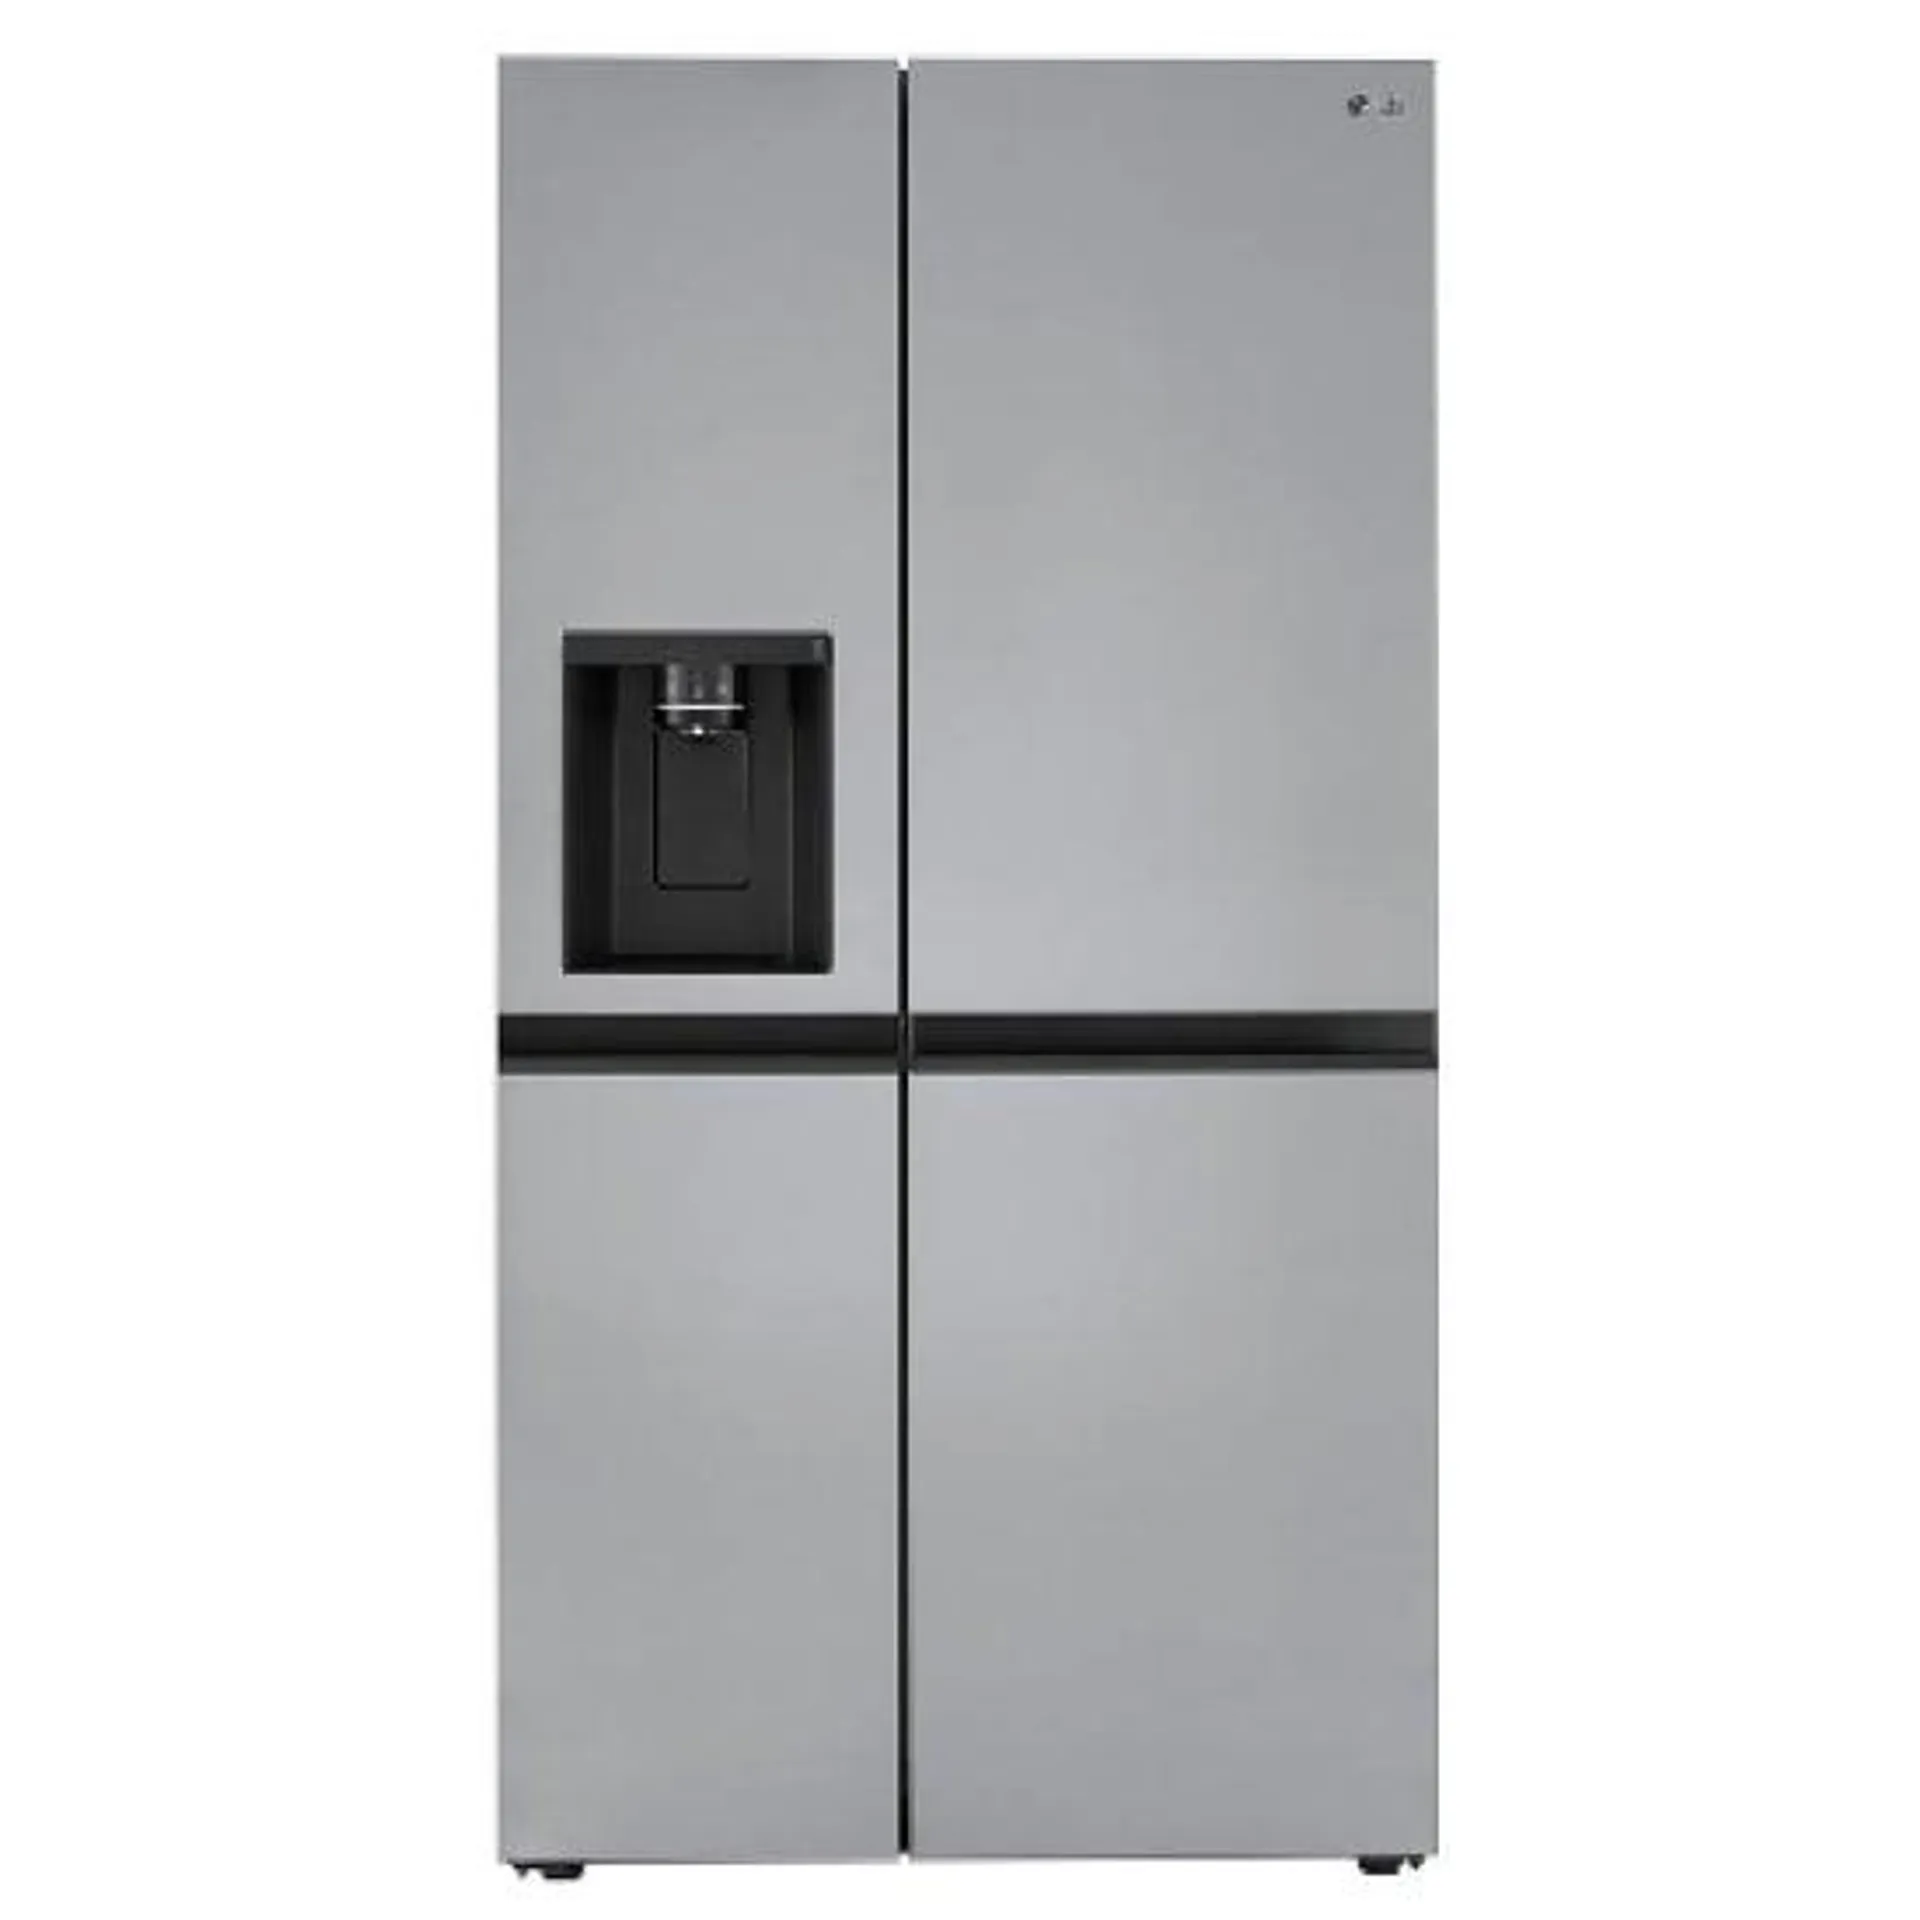 LG LRSXS2706V Side by Side Refrigerator, 36 inch Width, 27.1 cu. ft. Capacity, Platinum Silver colour